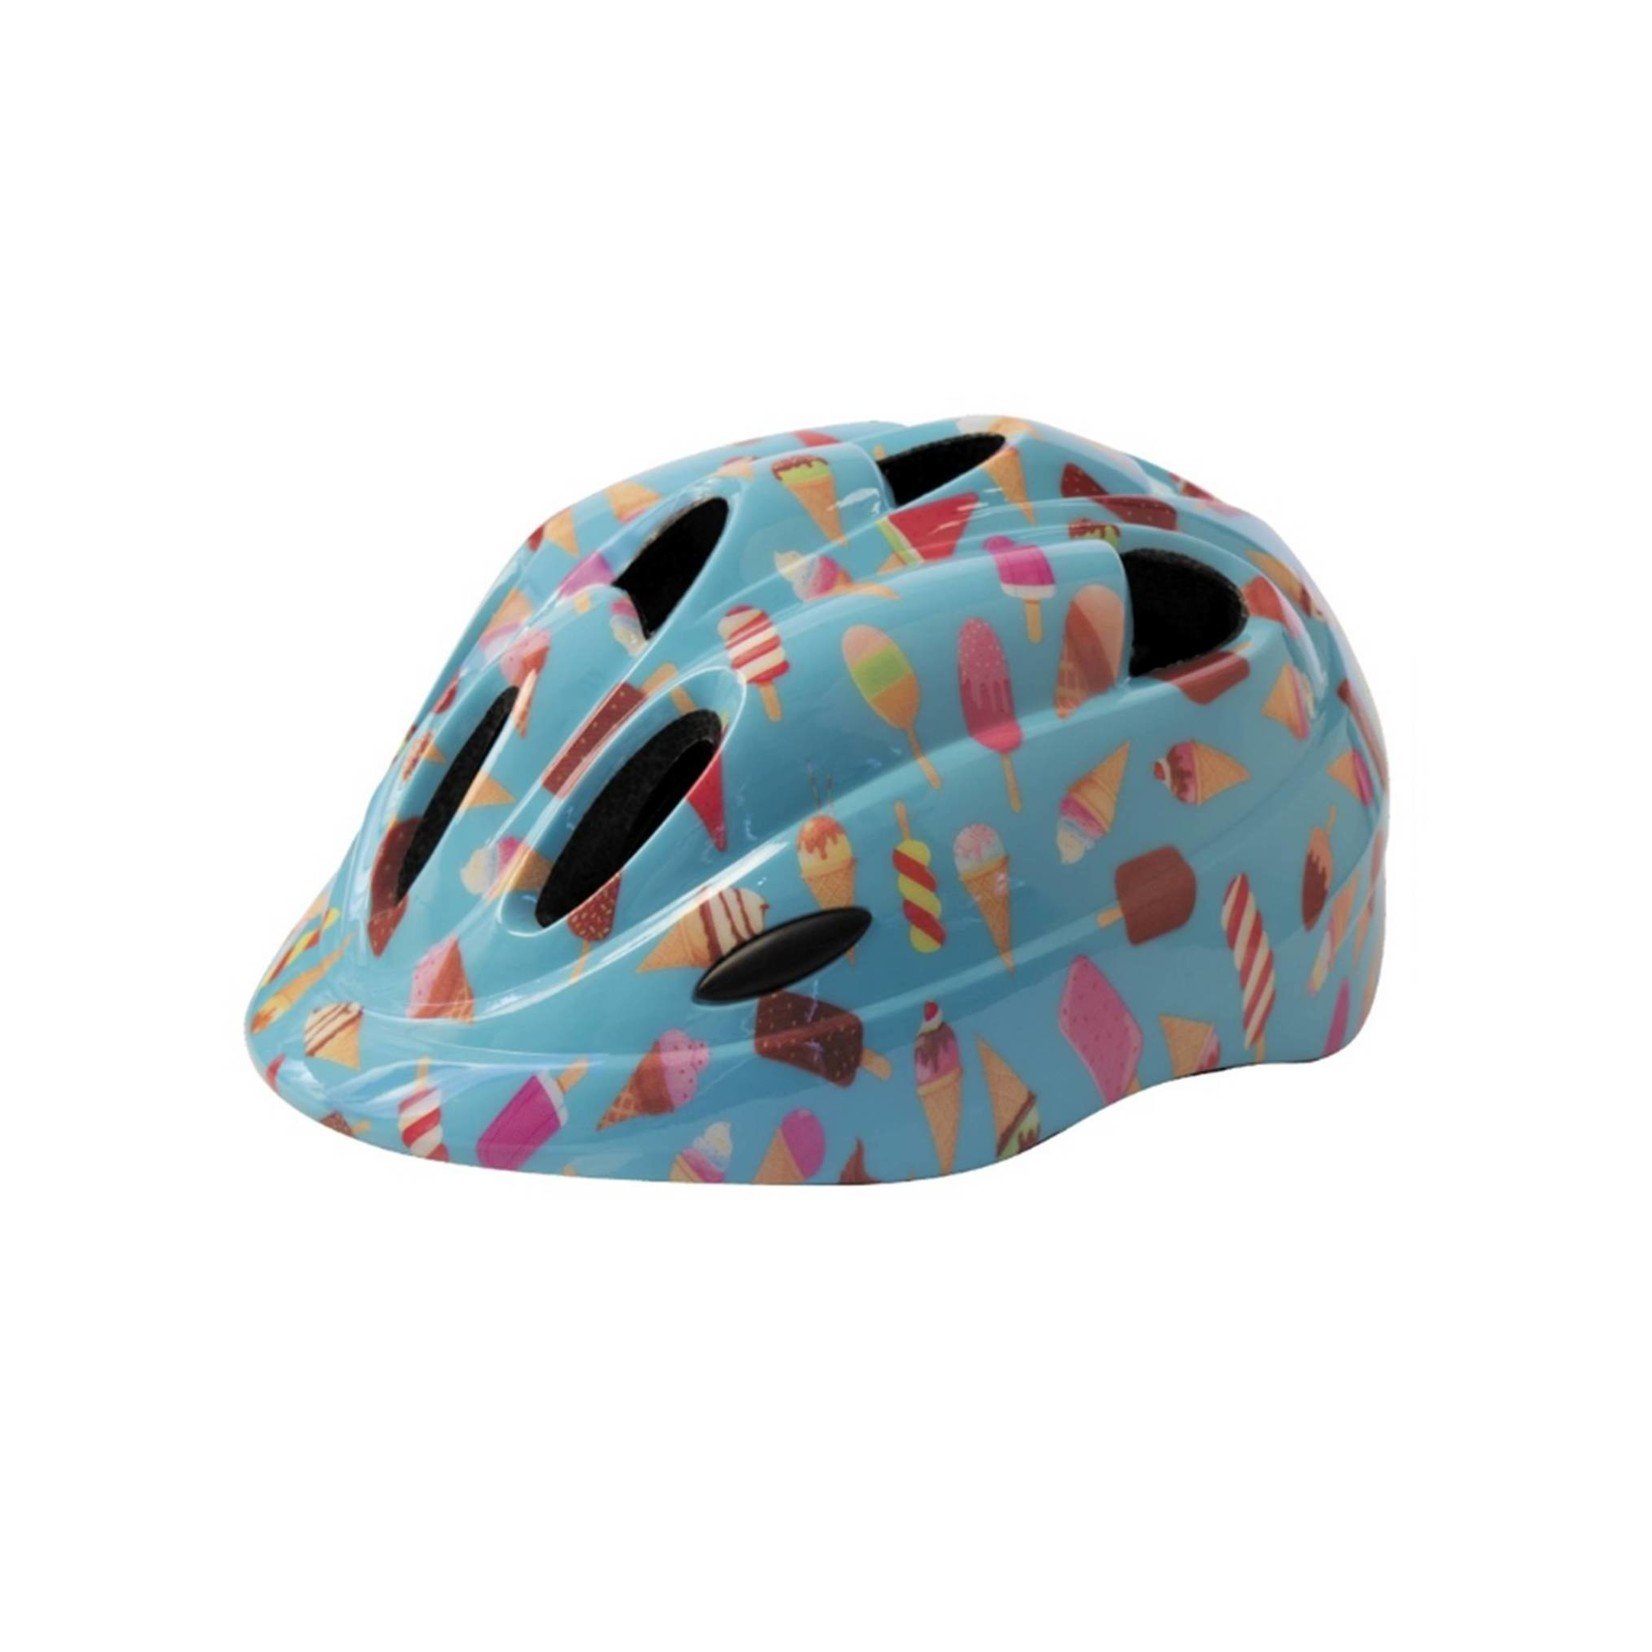 Azur Ice-Cream Kids Helmet